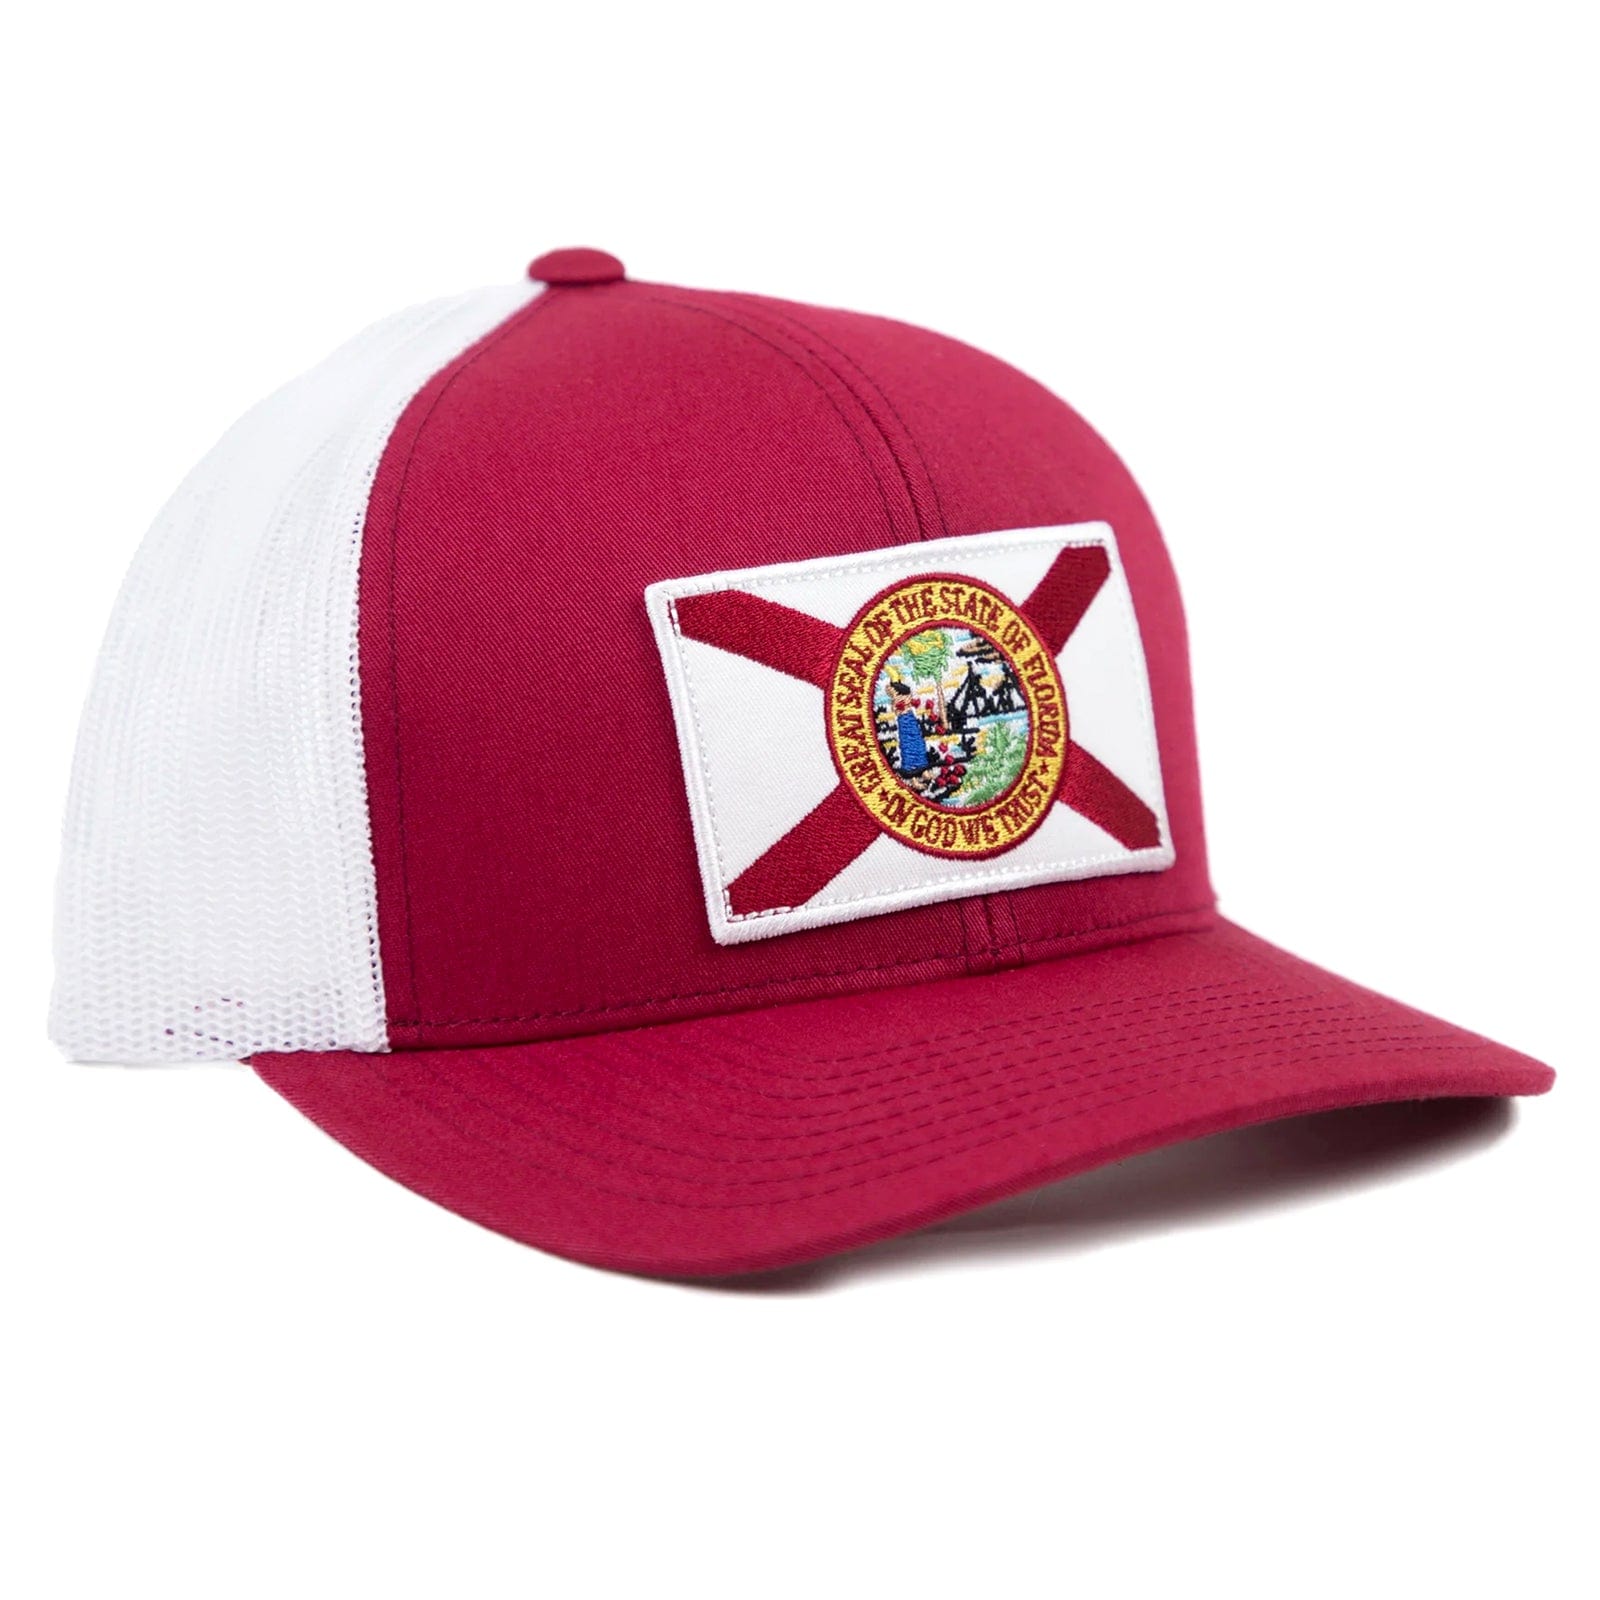 Florida Cracker Trading Company Hats Florida Cracker Trading Co. State Flag Cardinal/White Mesh Ball Cap